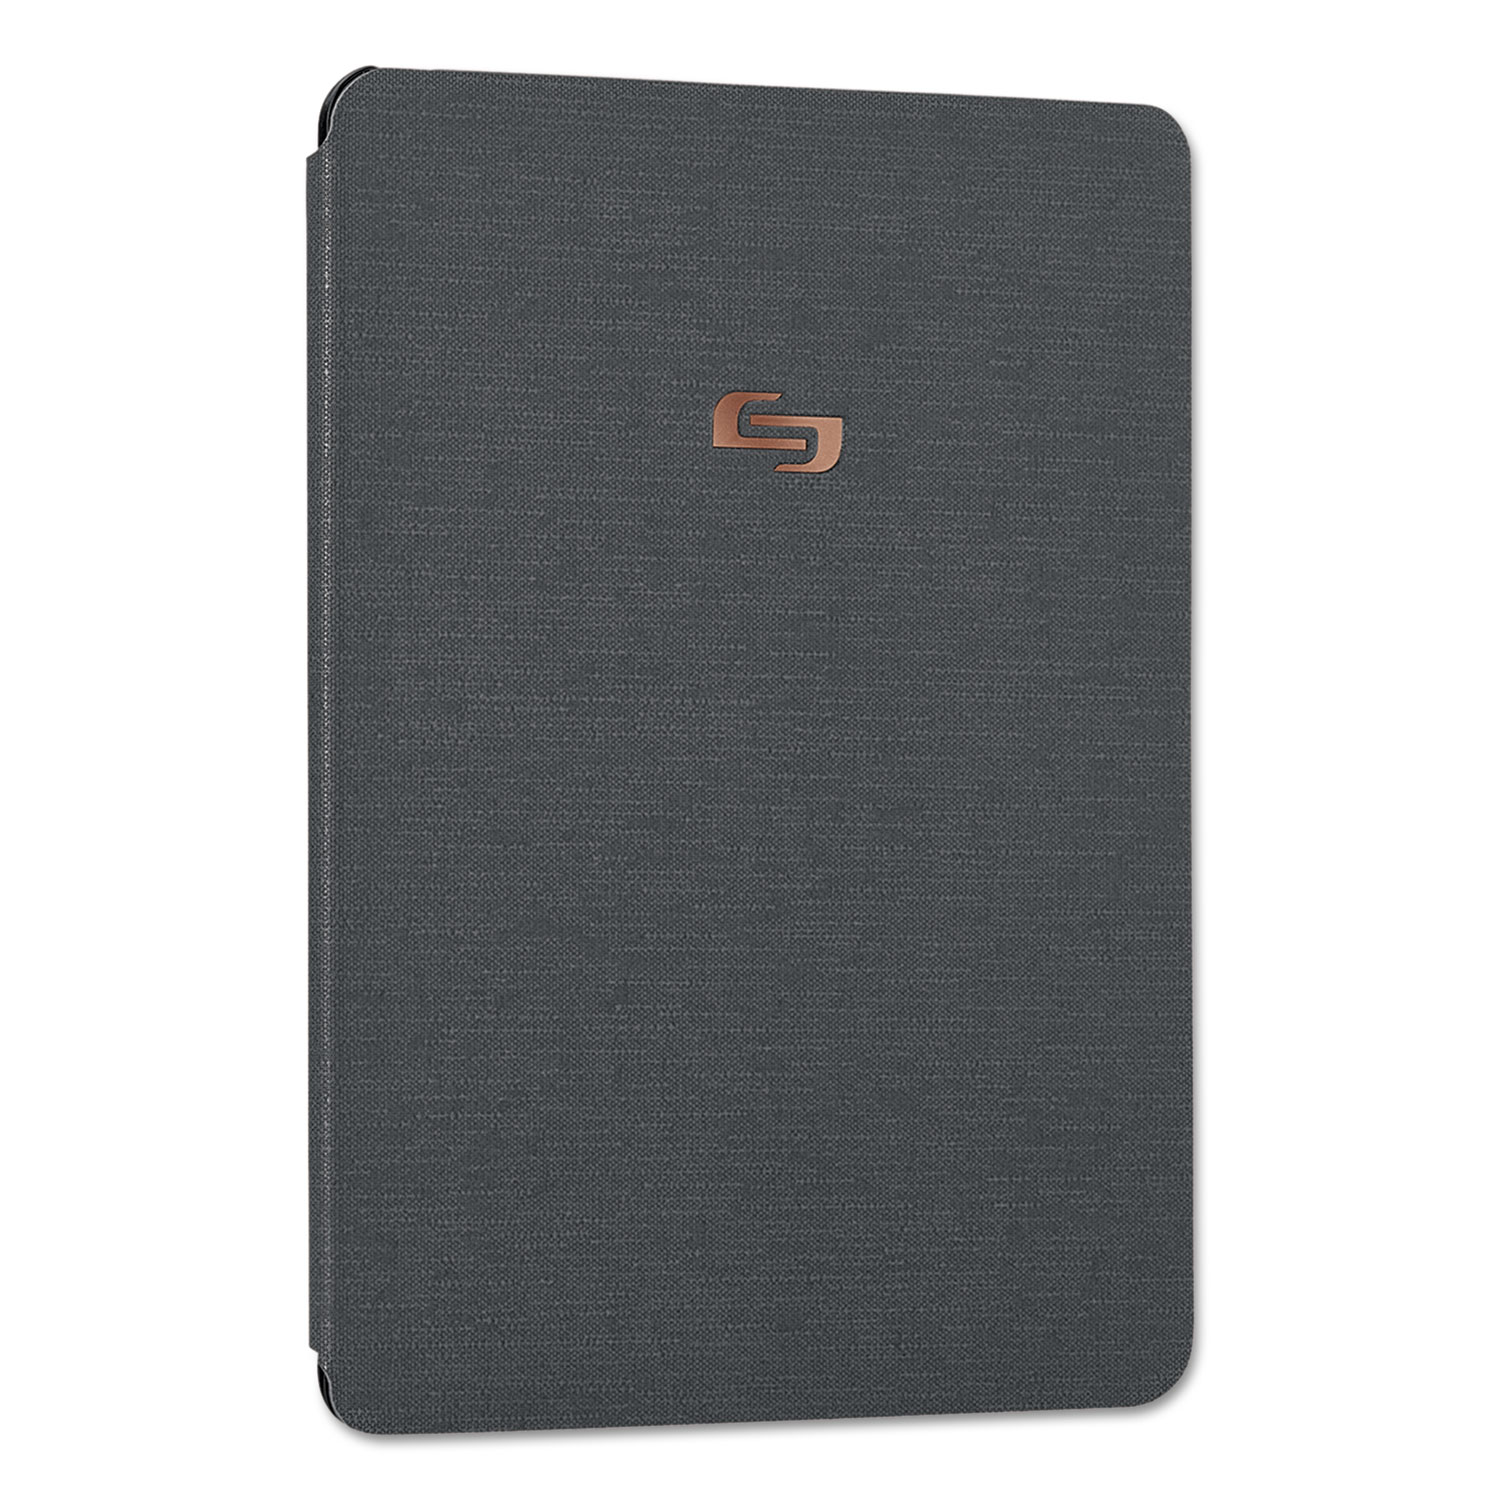 Ludlow Slim Case for iPad Air, Gray